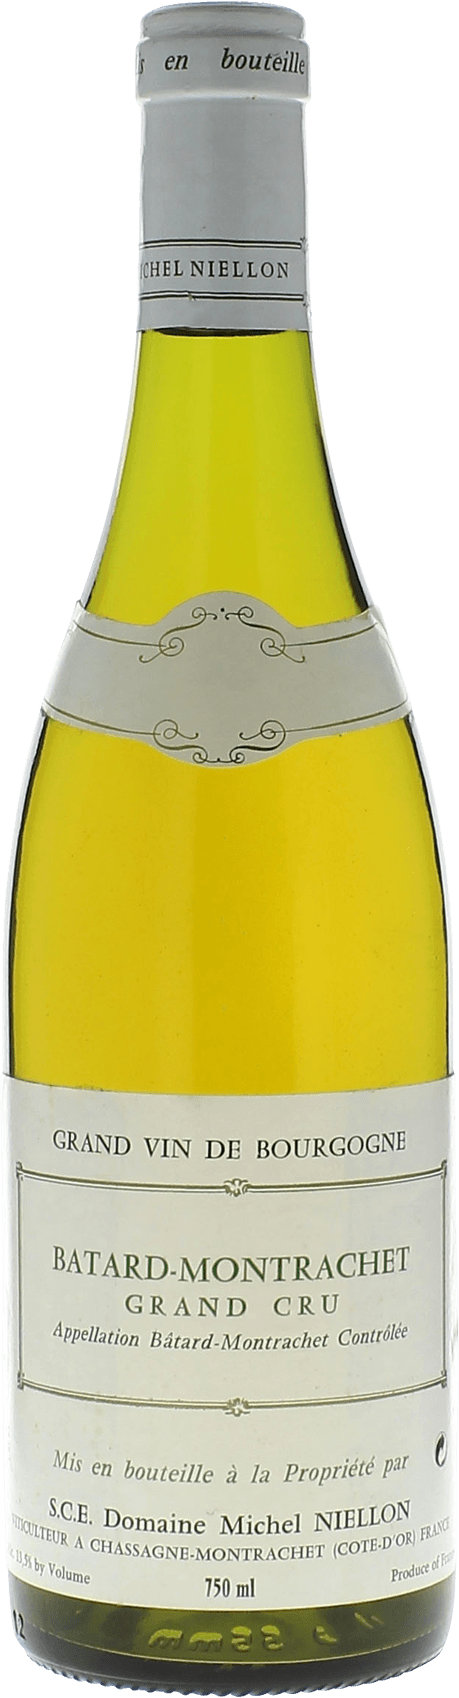 Batard montrachet grand cru 2010 Domaine NIELLON Michel, Bourgogne blanc